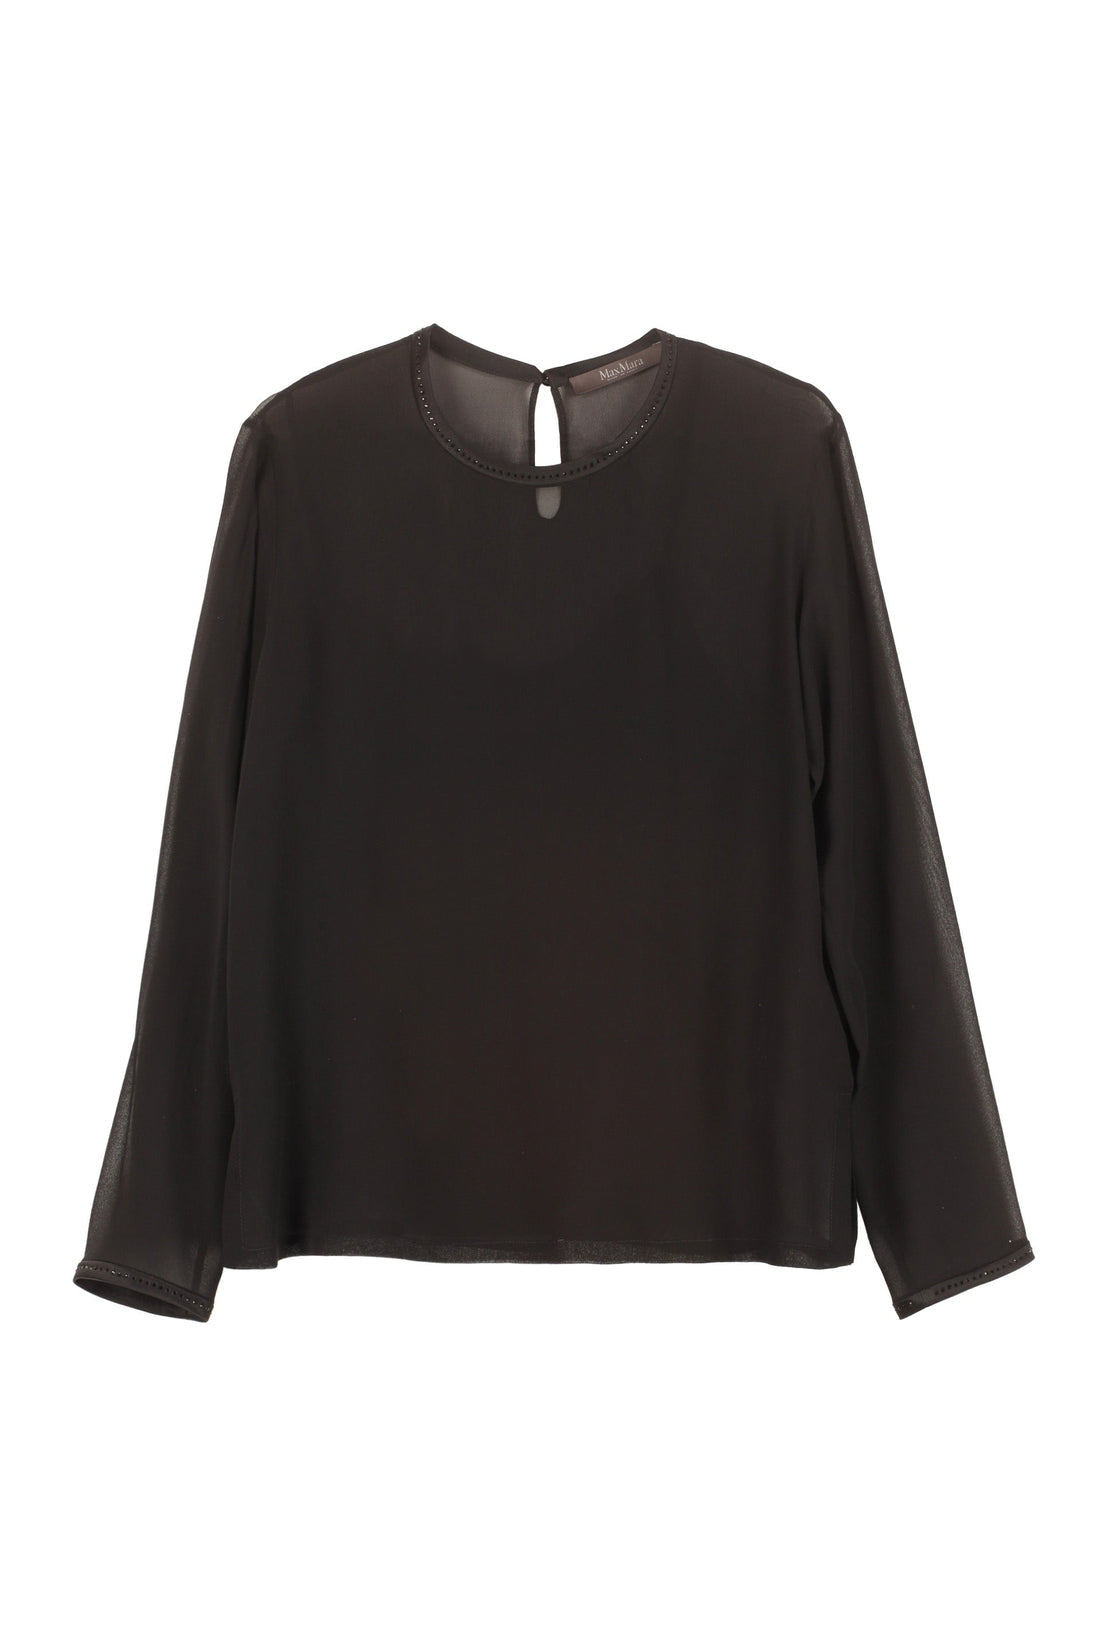 Max Mara-OUTLET-SALE-Ferrara silk blouse-ARCHIVIST